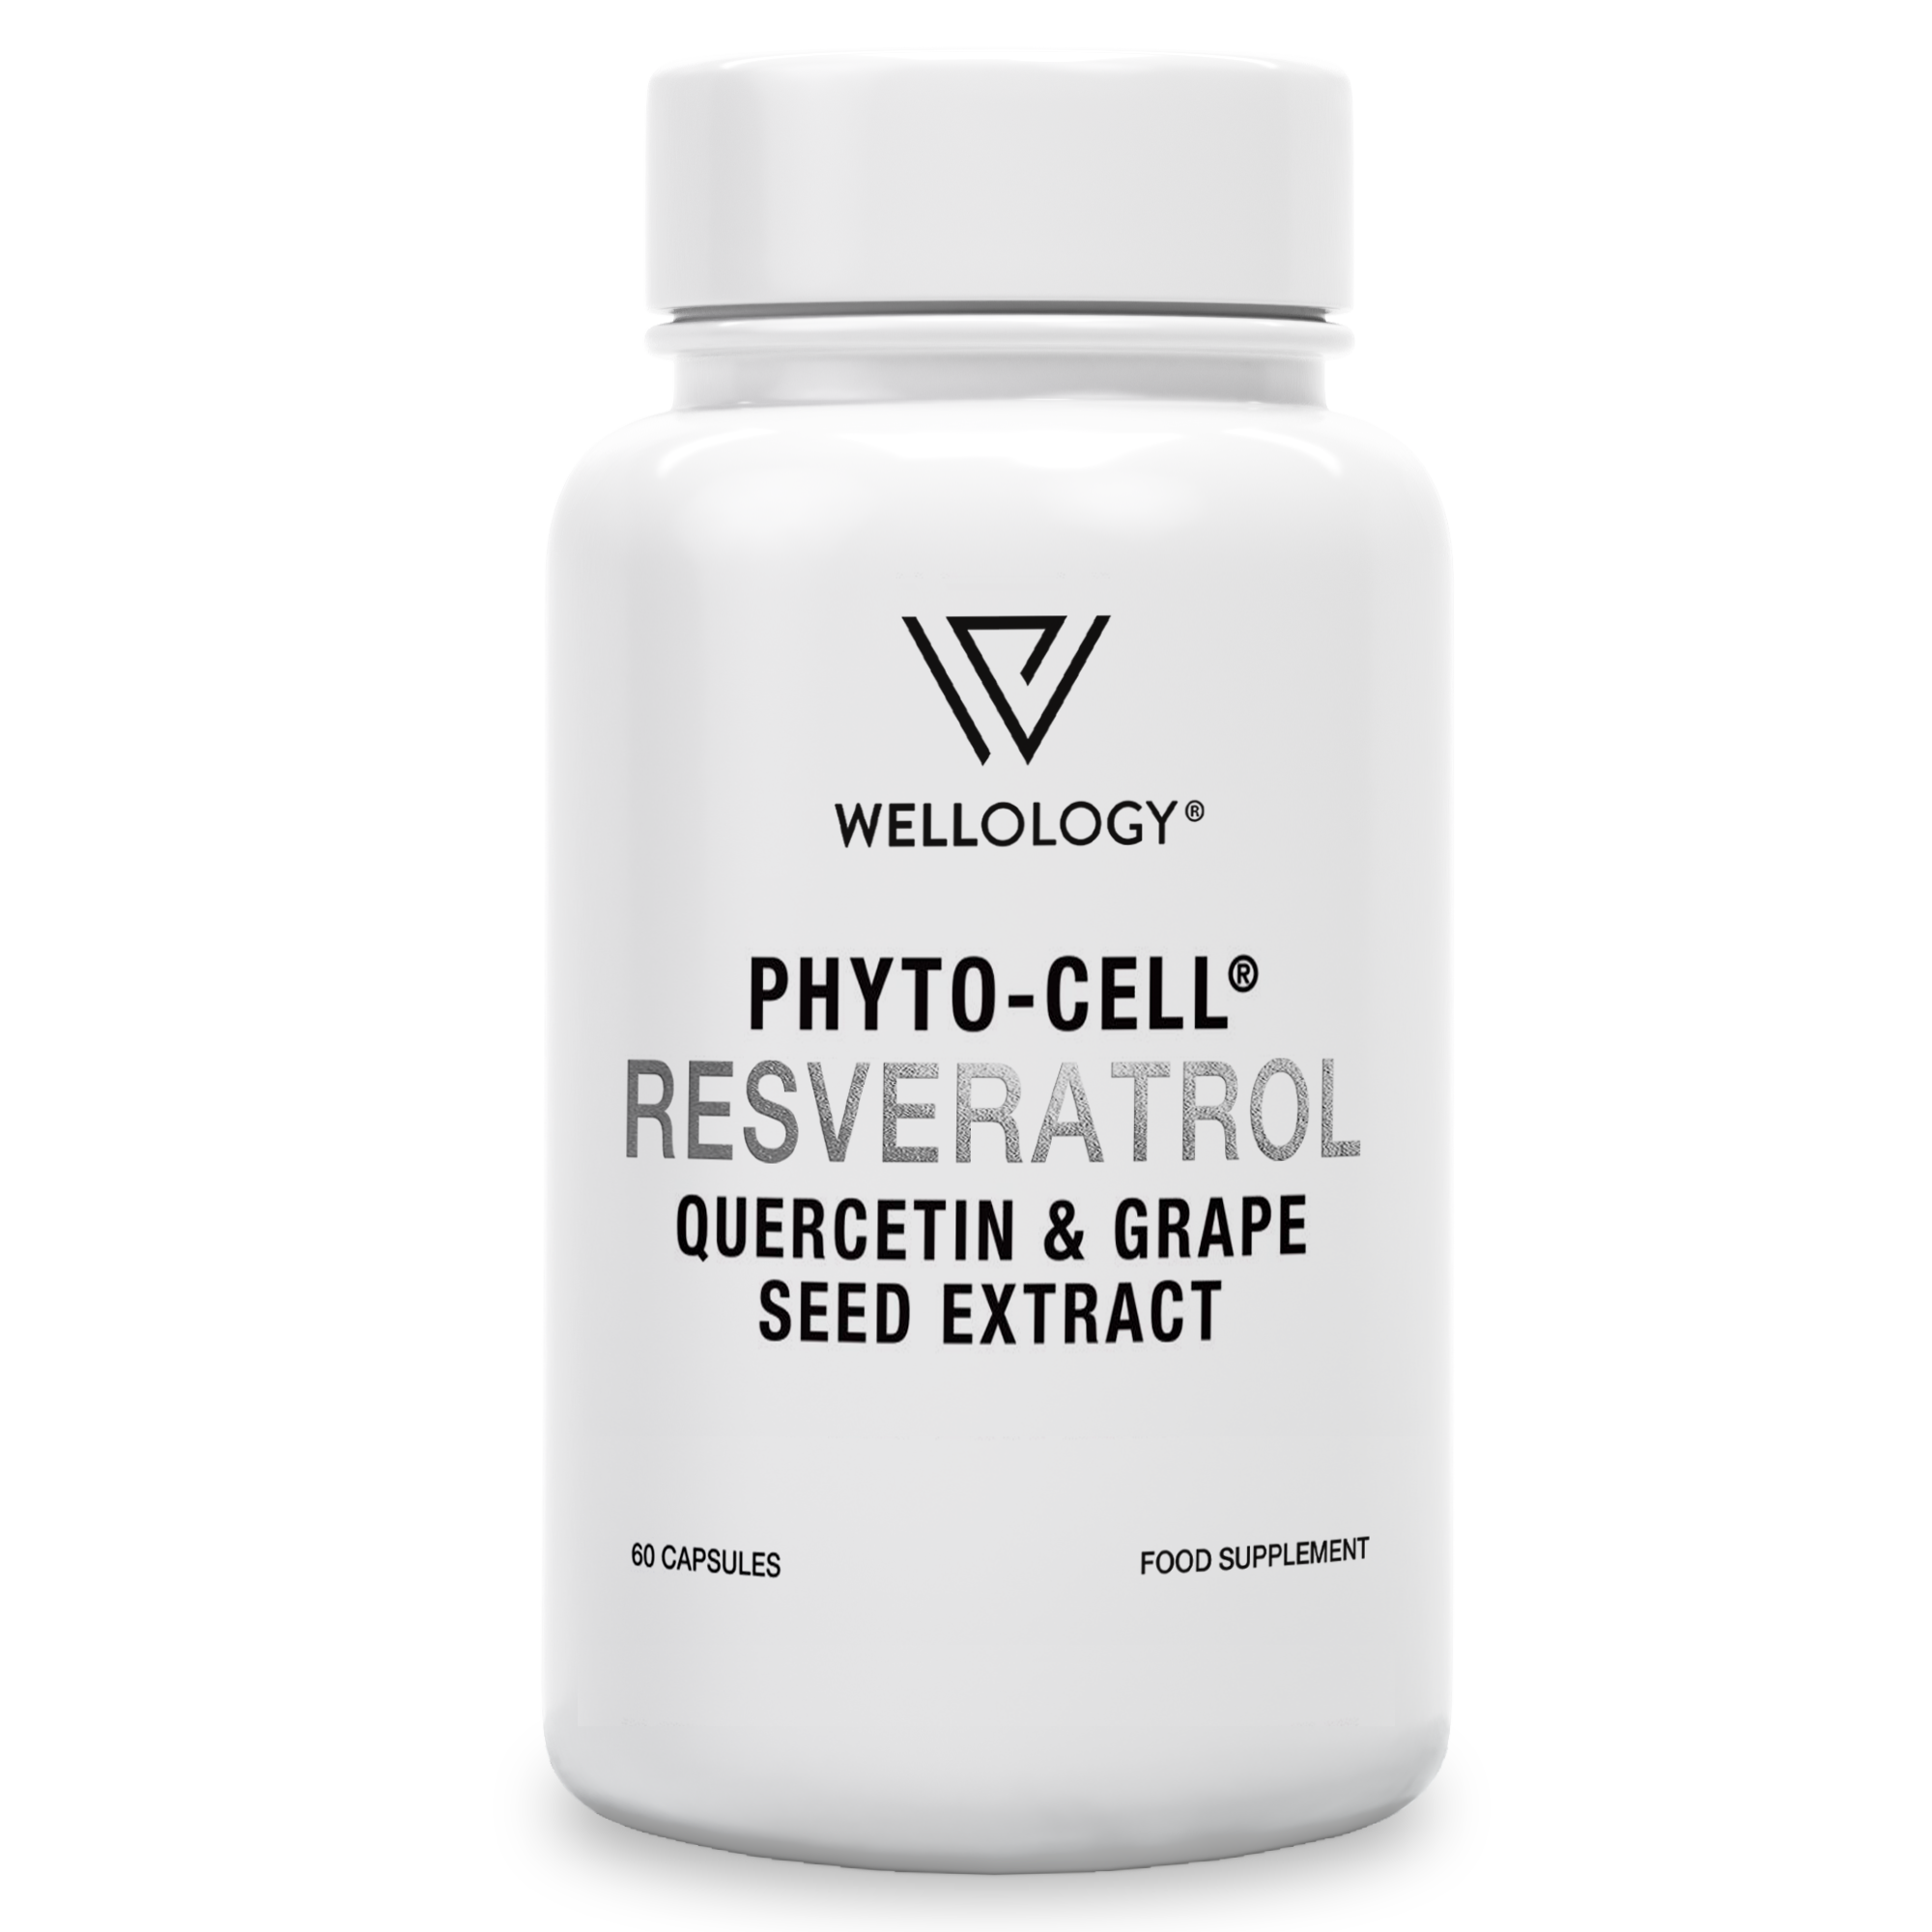 Phyto-Cell Resveratrol